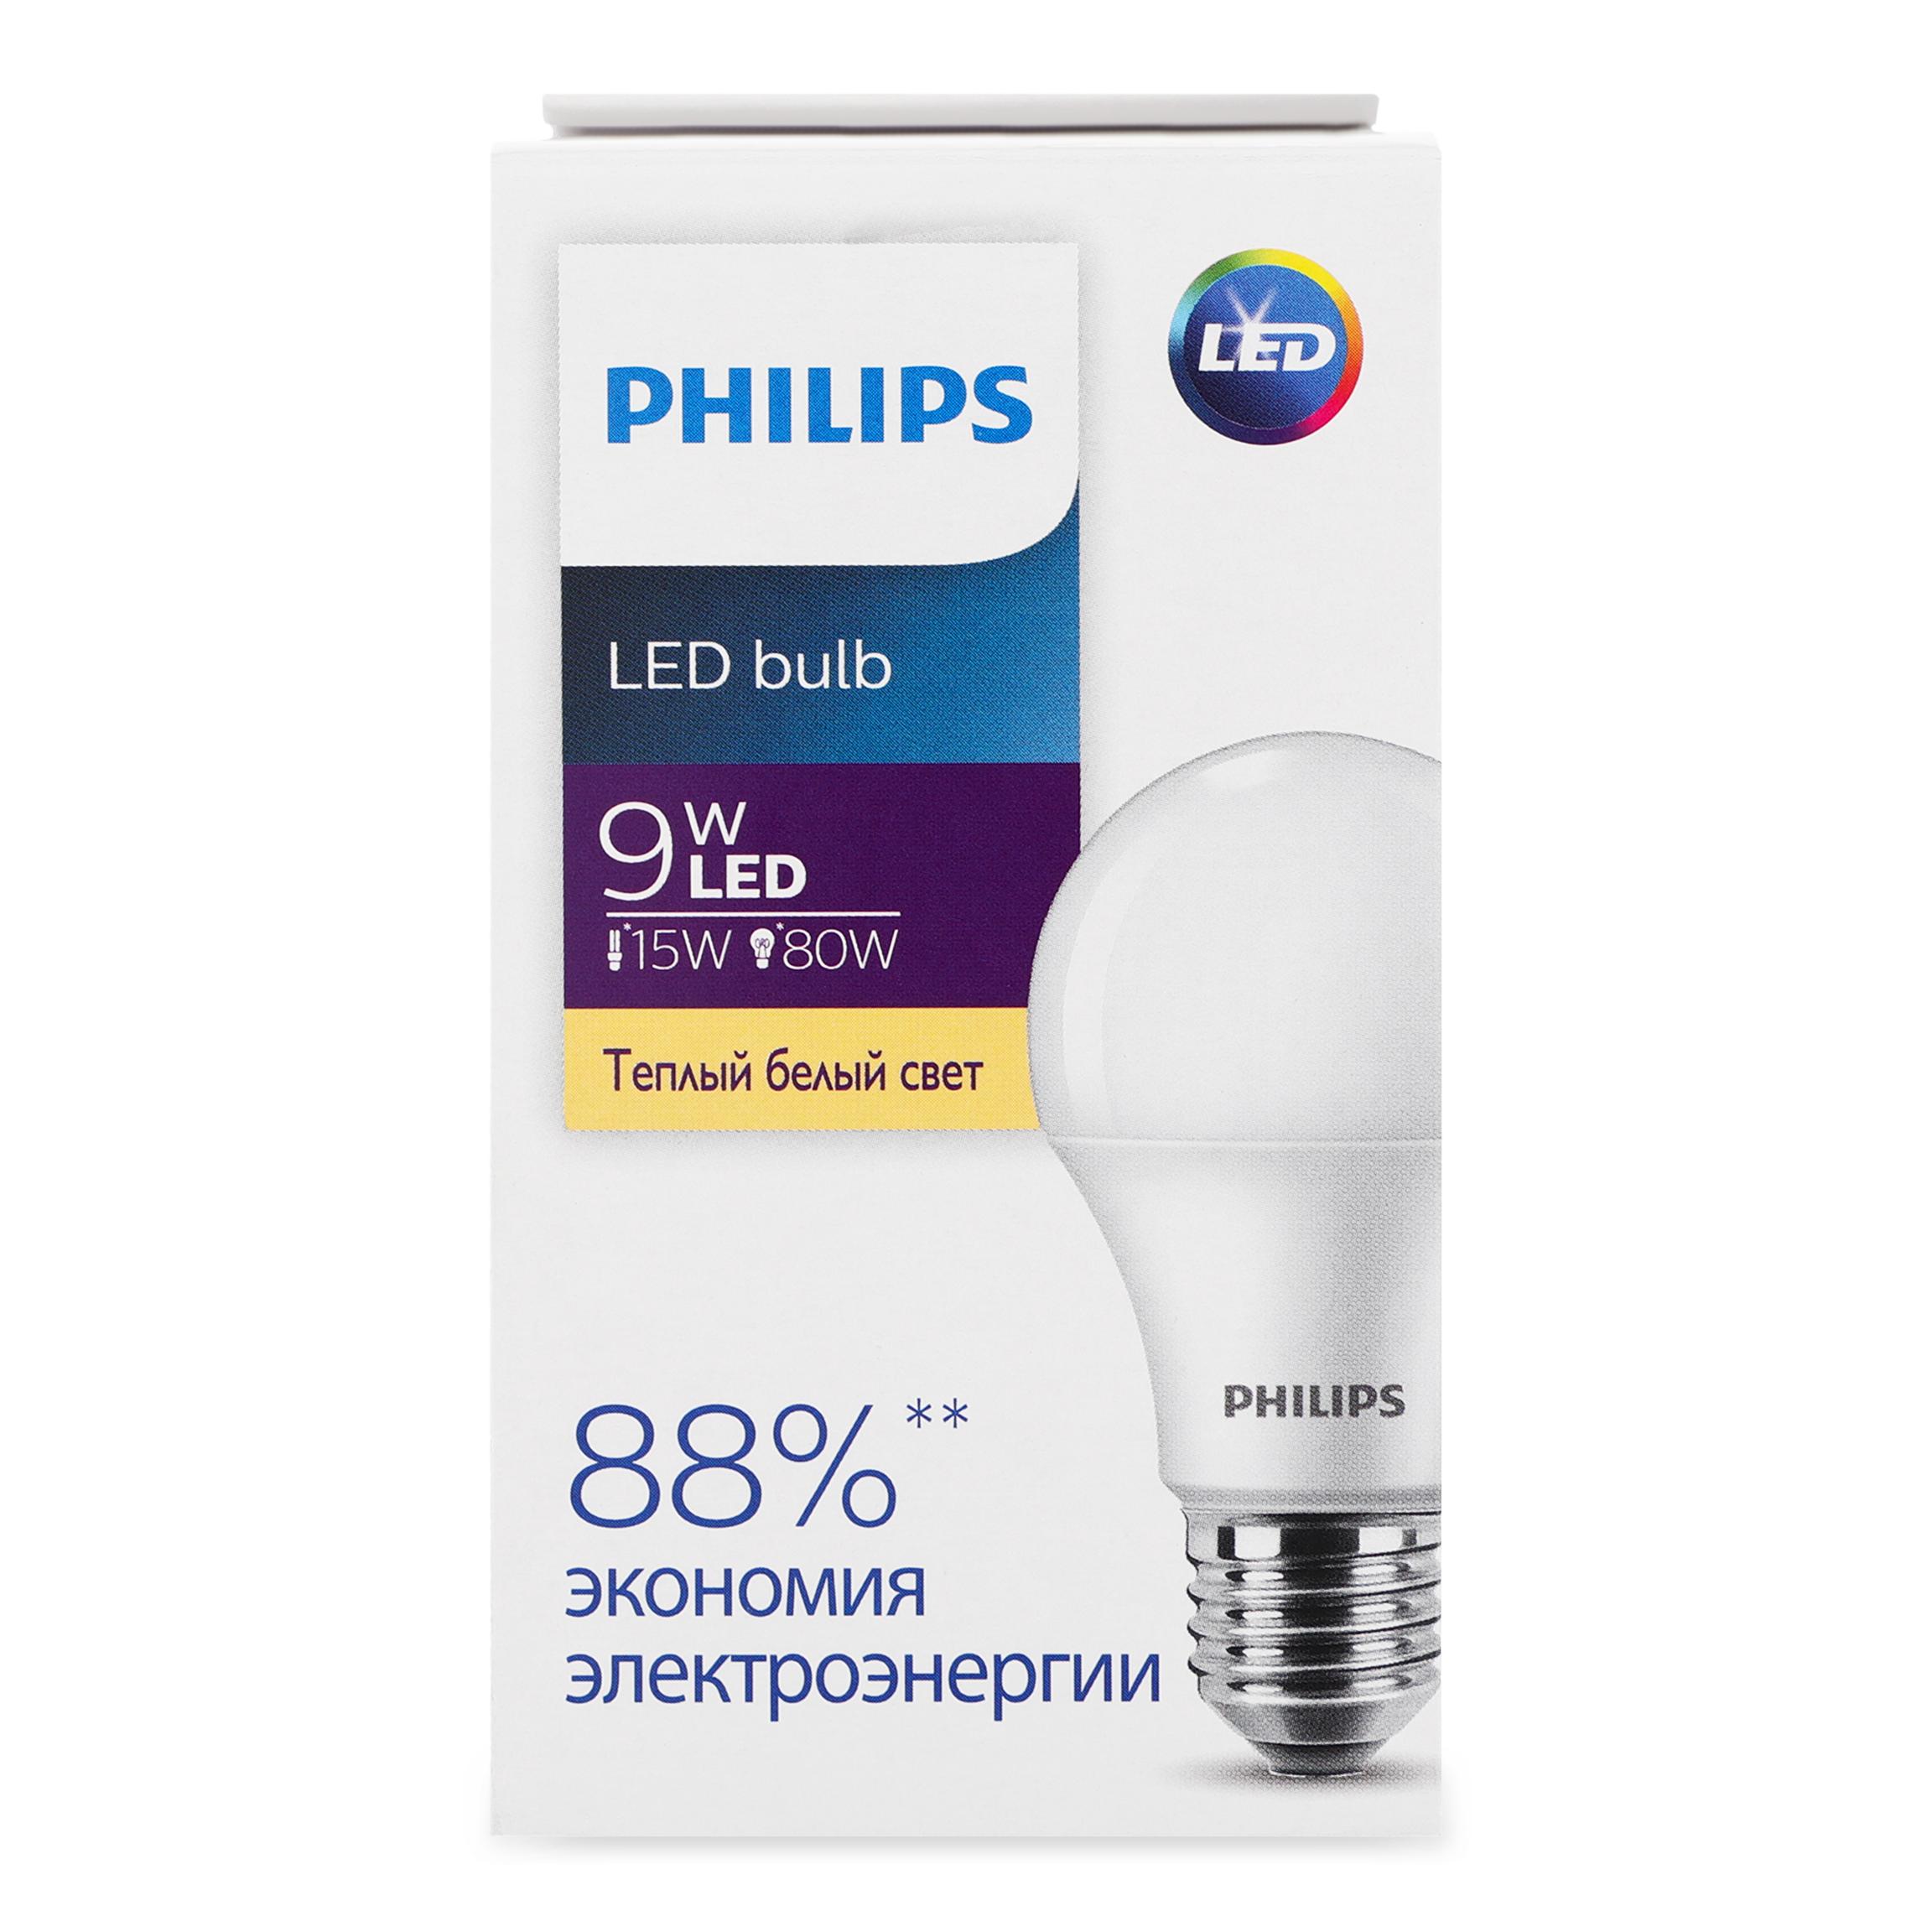 Philips LED Bulb 9W E27 3000K